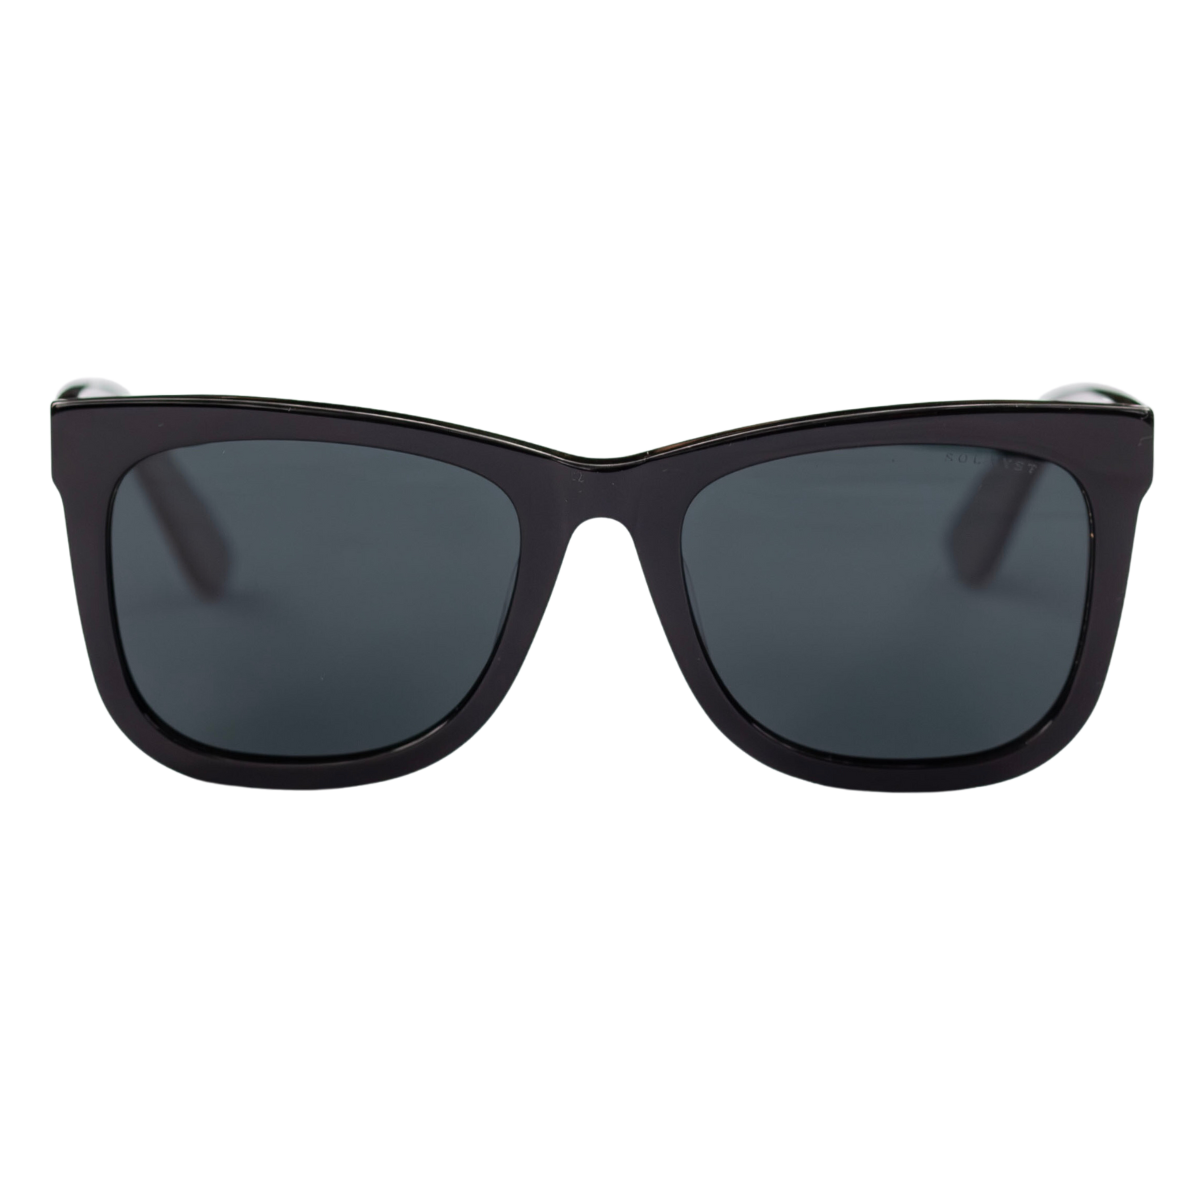 sunglasses, wayfarer silhouette, black frame, black lens, wide face sunglasses, wide face petite, midi size, slightly wider than standard